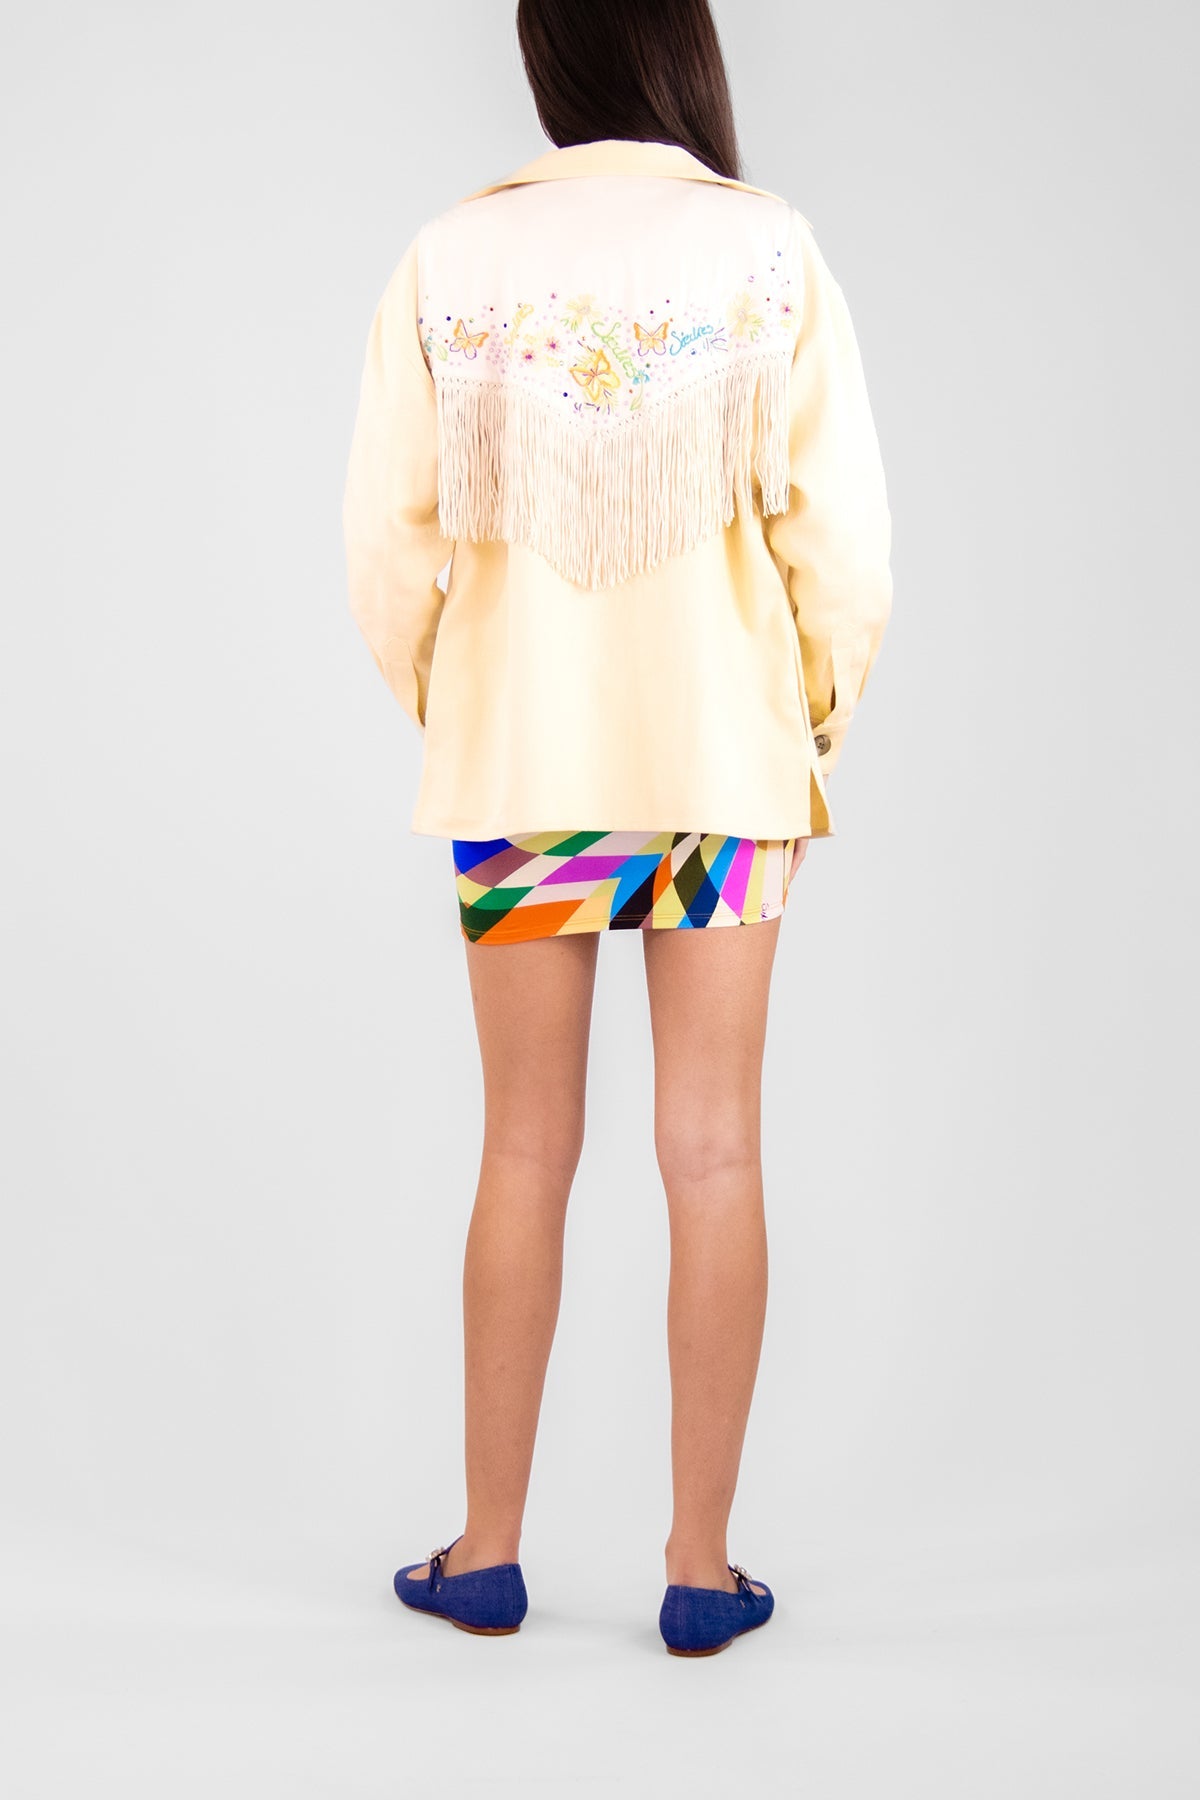 Gus Kaleidoscope Jerseey Mini Skirt in Multi - shop-olivia.com